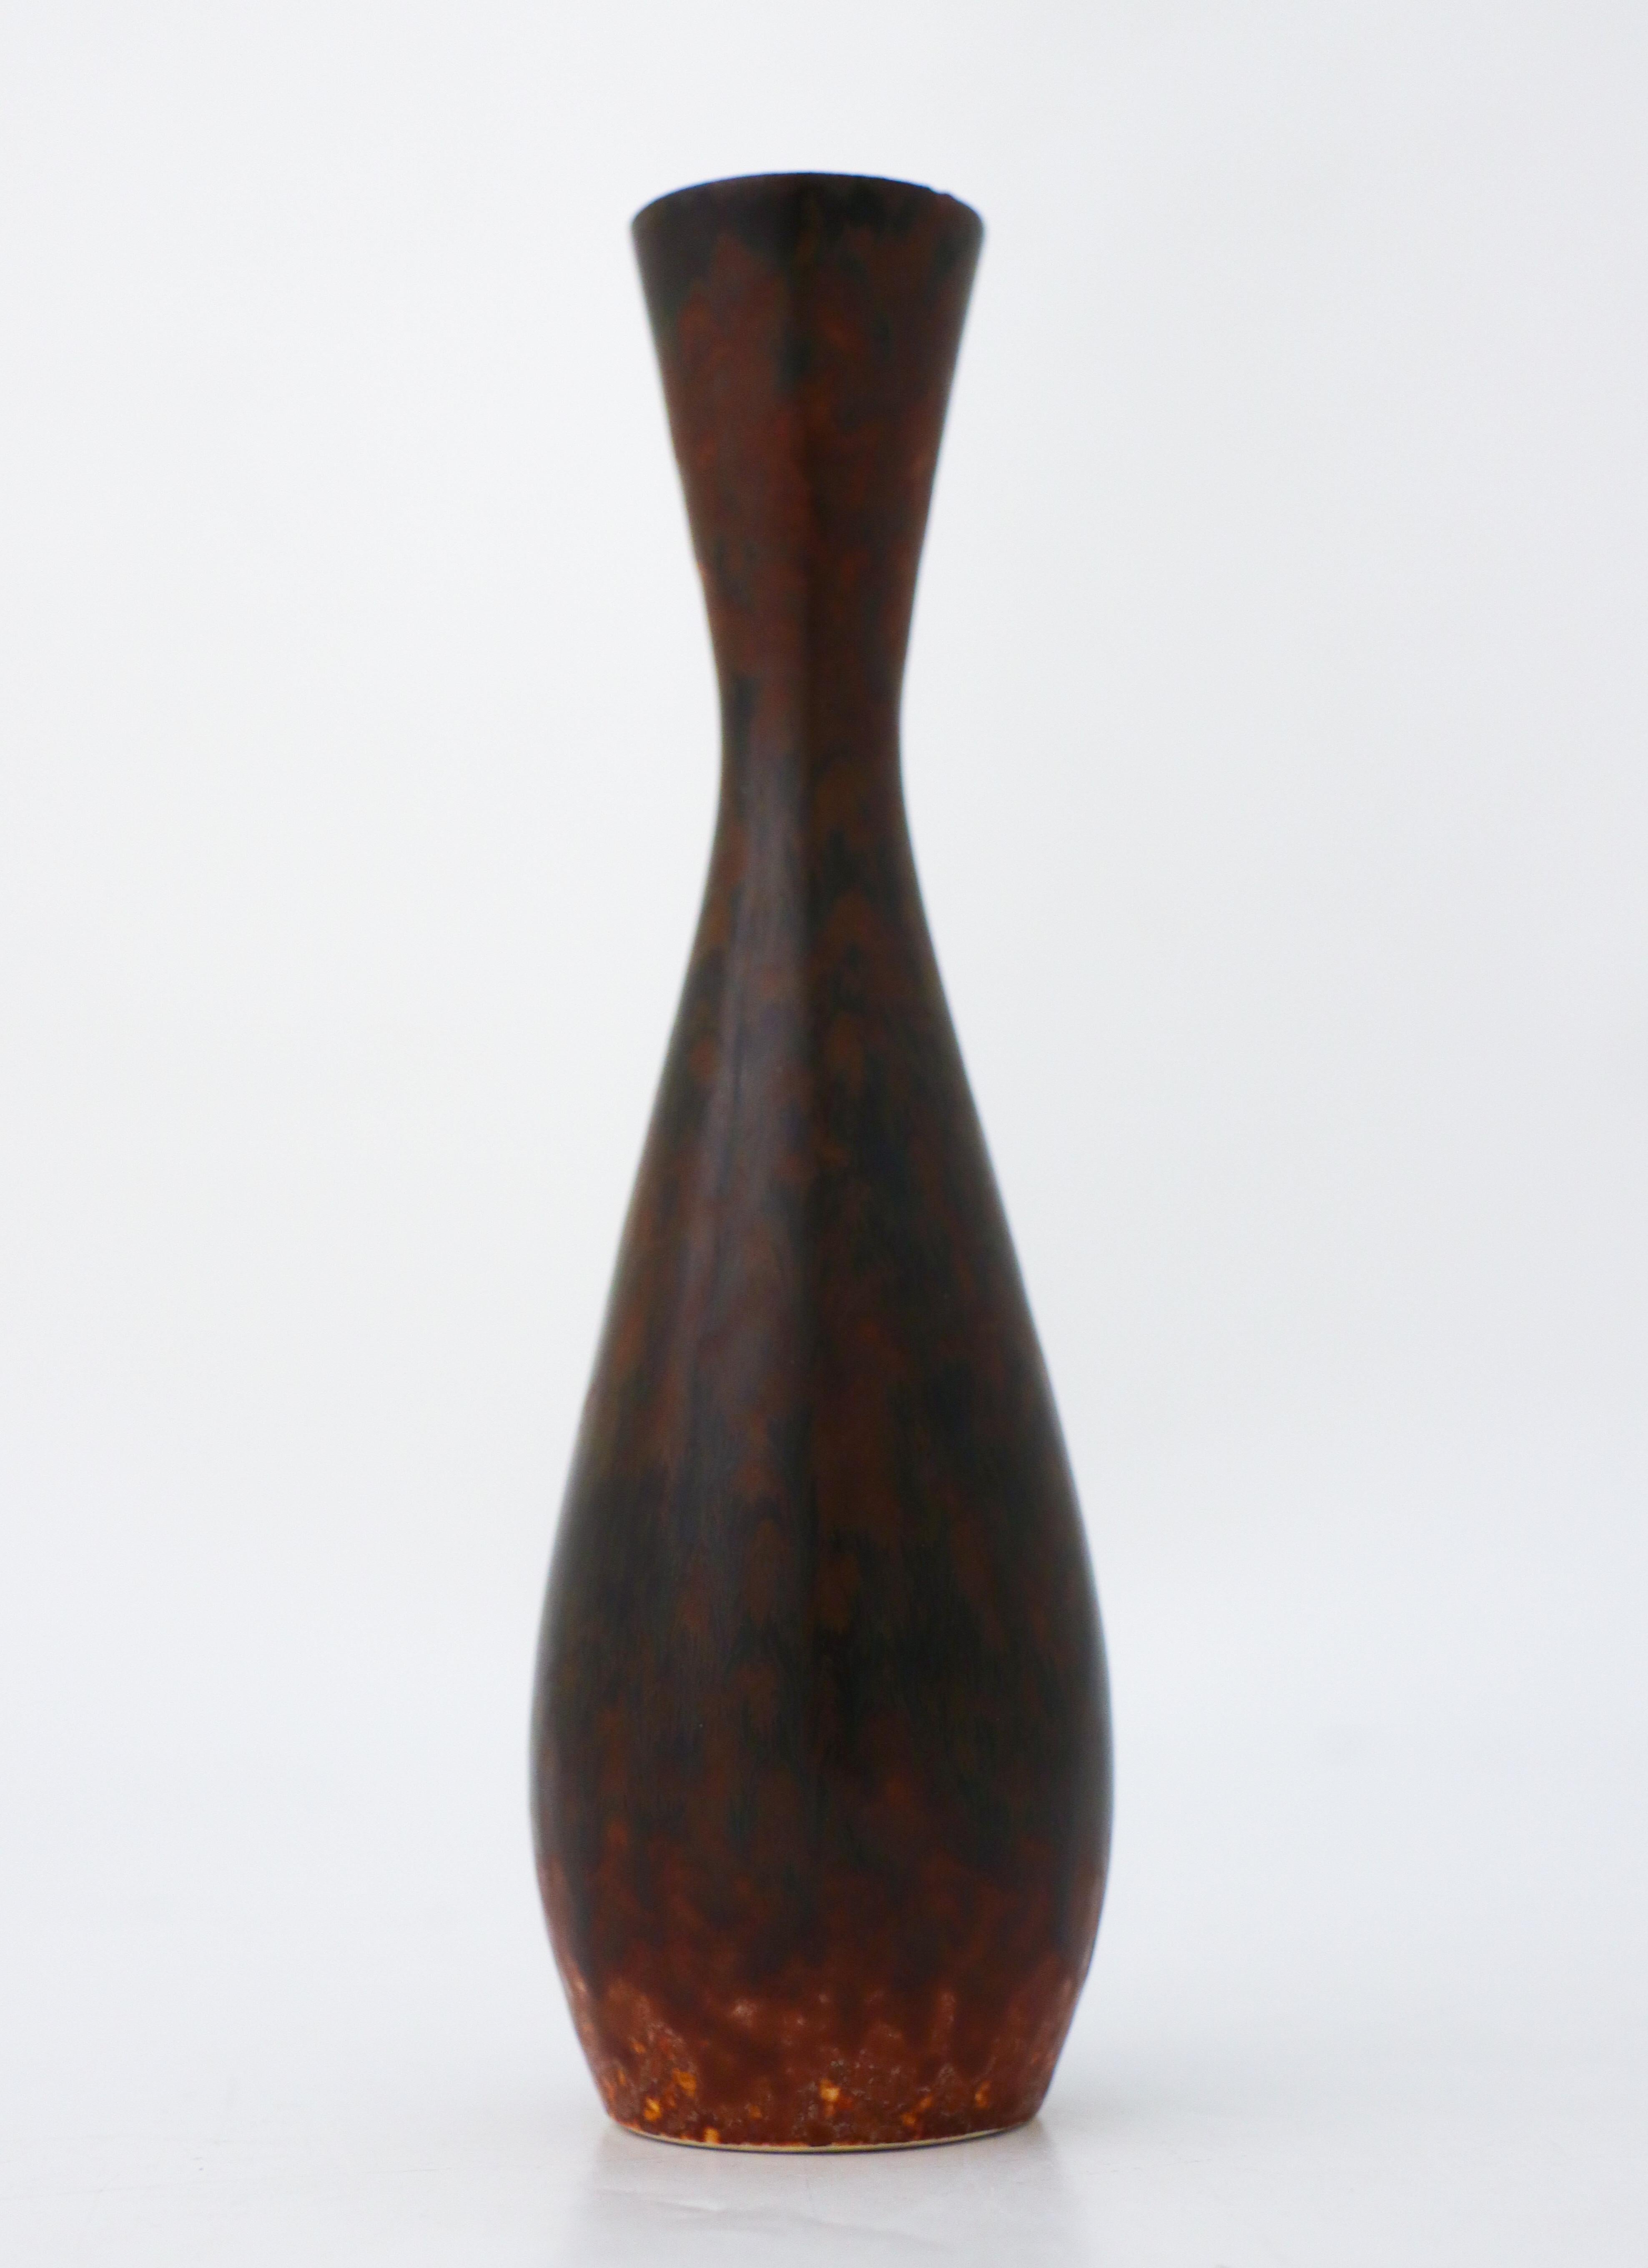 A brown vase designed by Carl-Harry Stålhane at Rörstrand. The vase is 17 cm (6.8